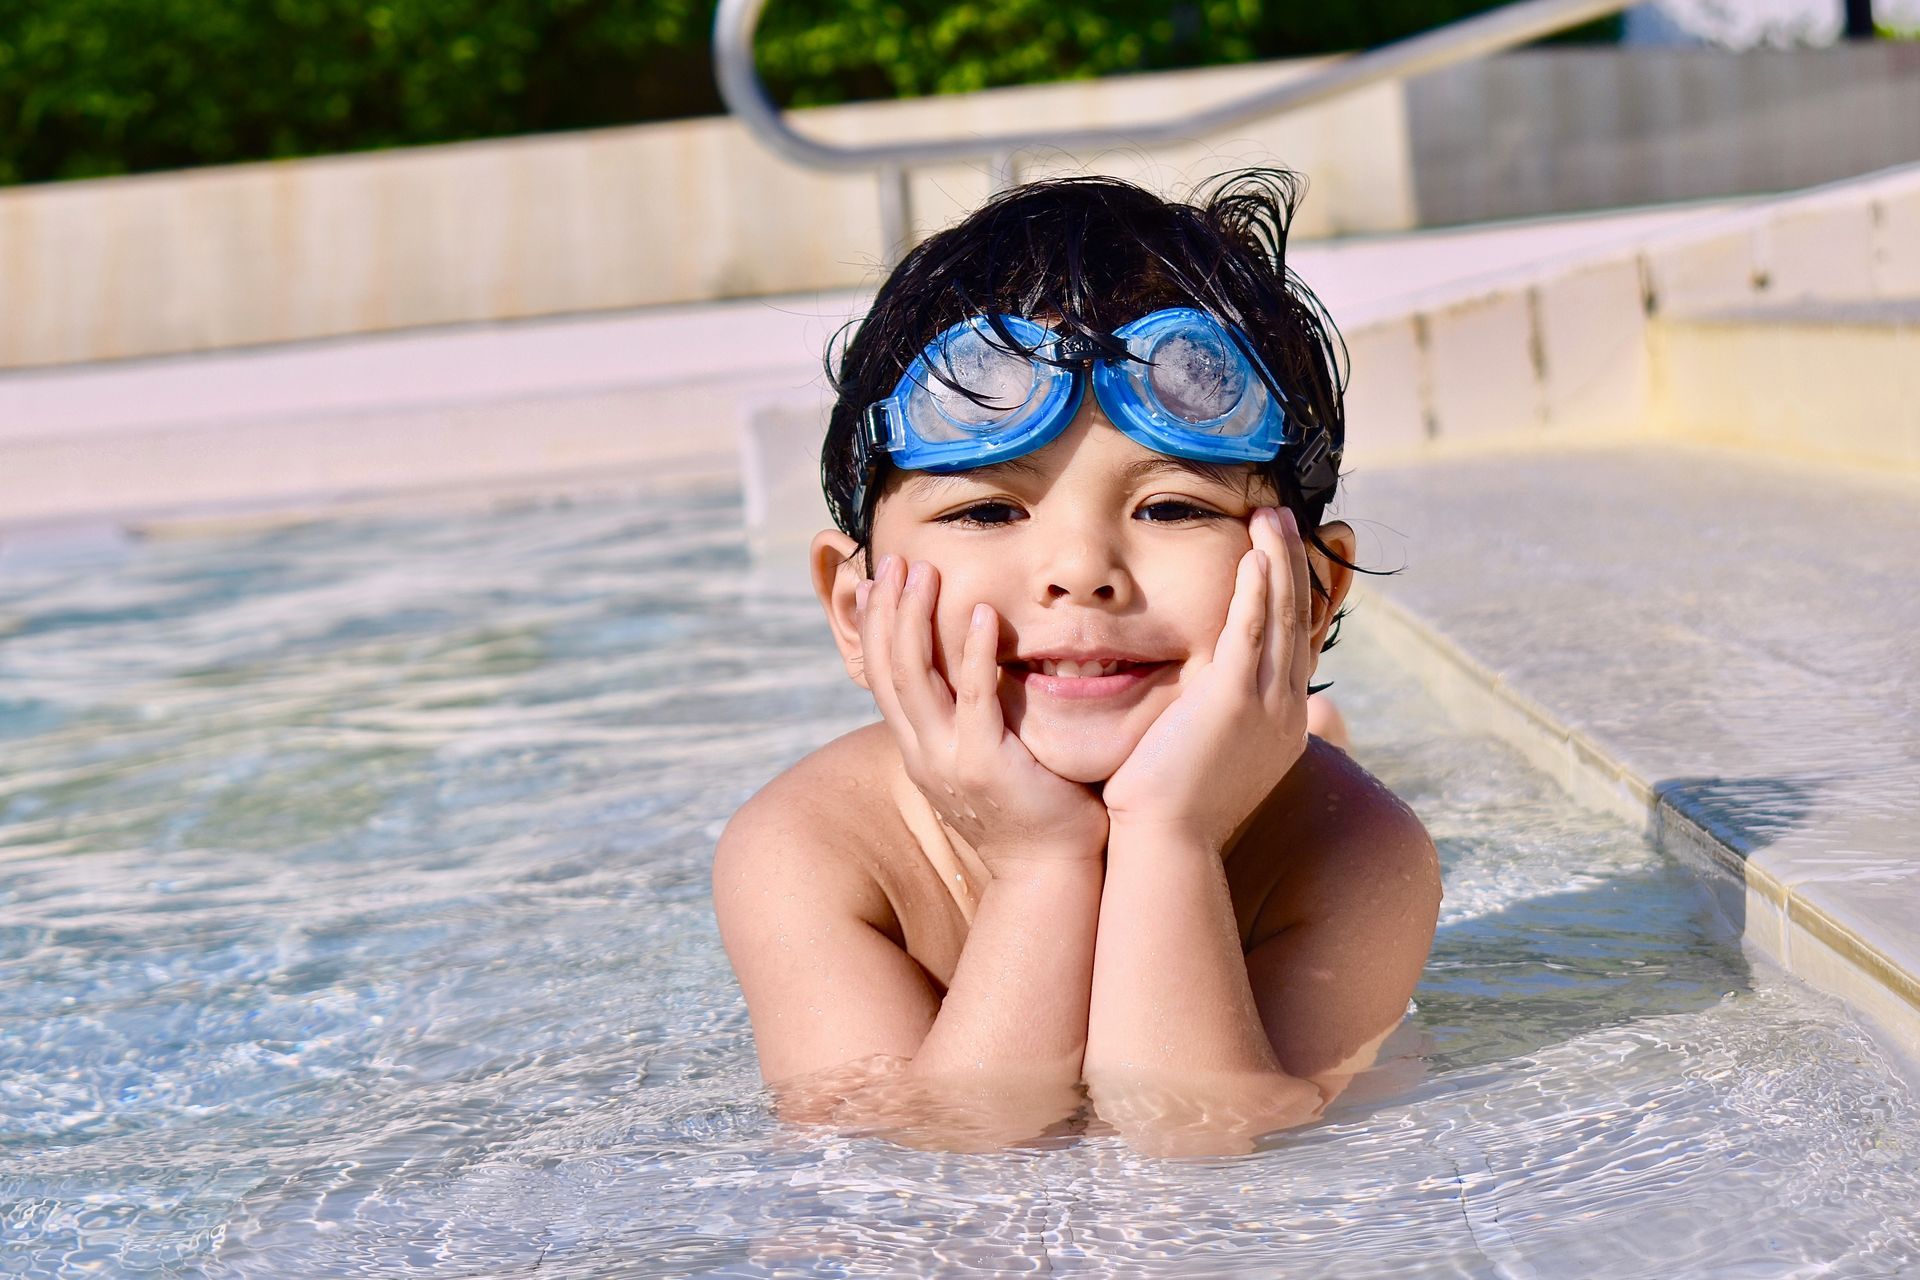 A boy on a swimming pool